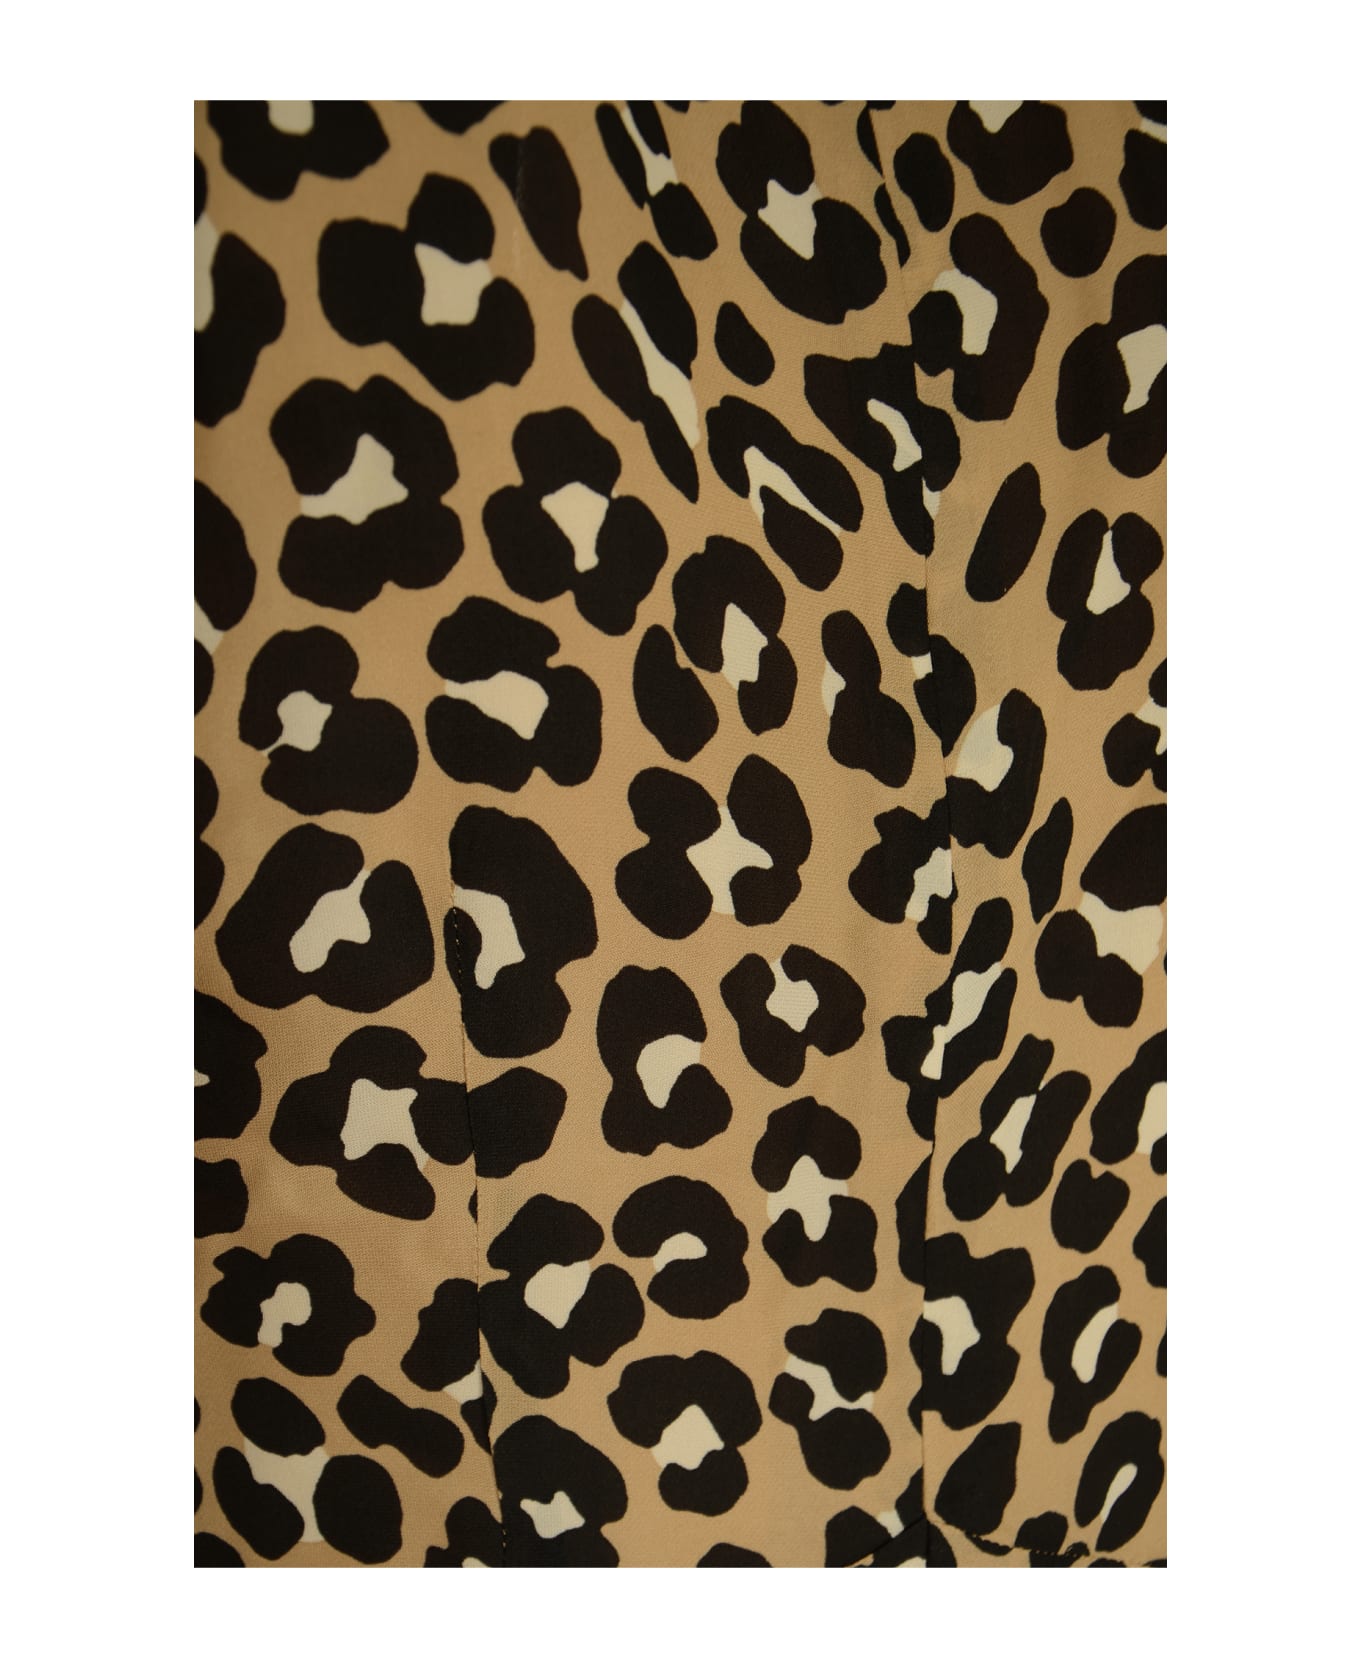 Michael Kors Animal Print Dress - Khaki/Black